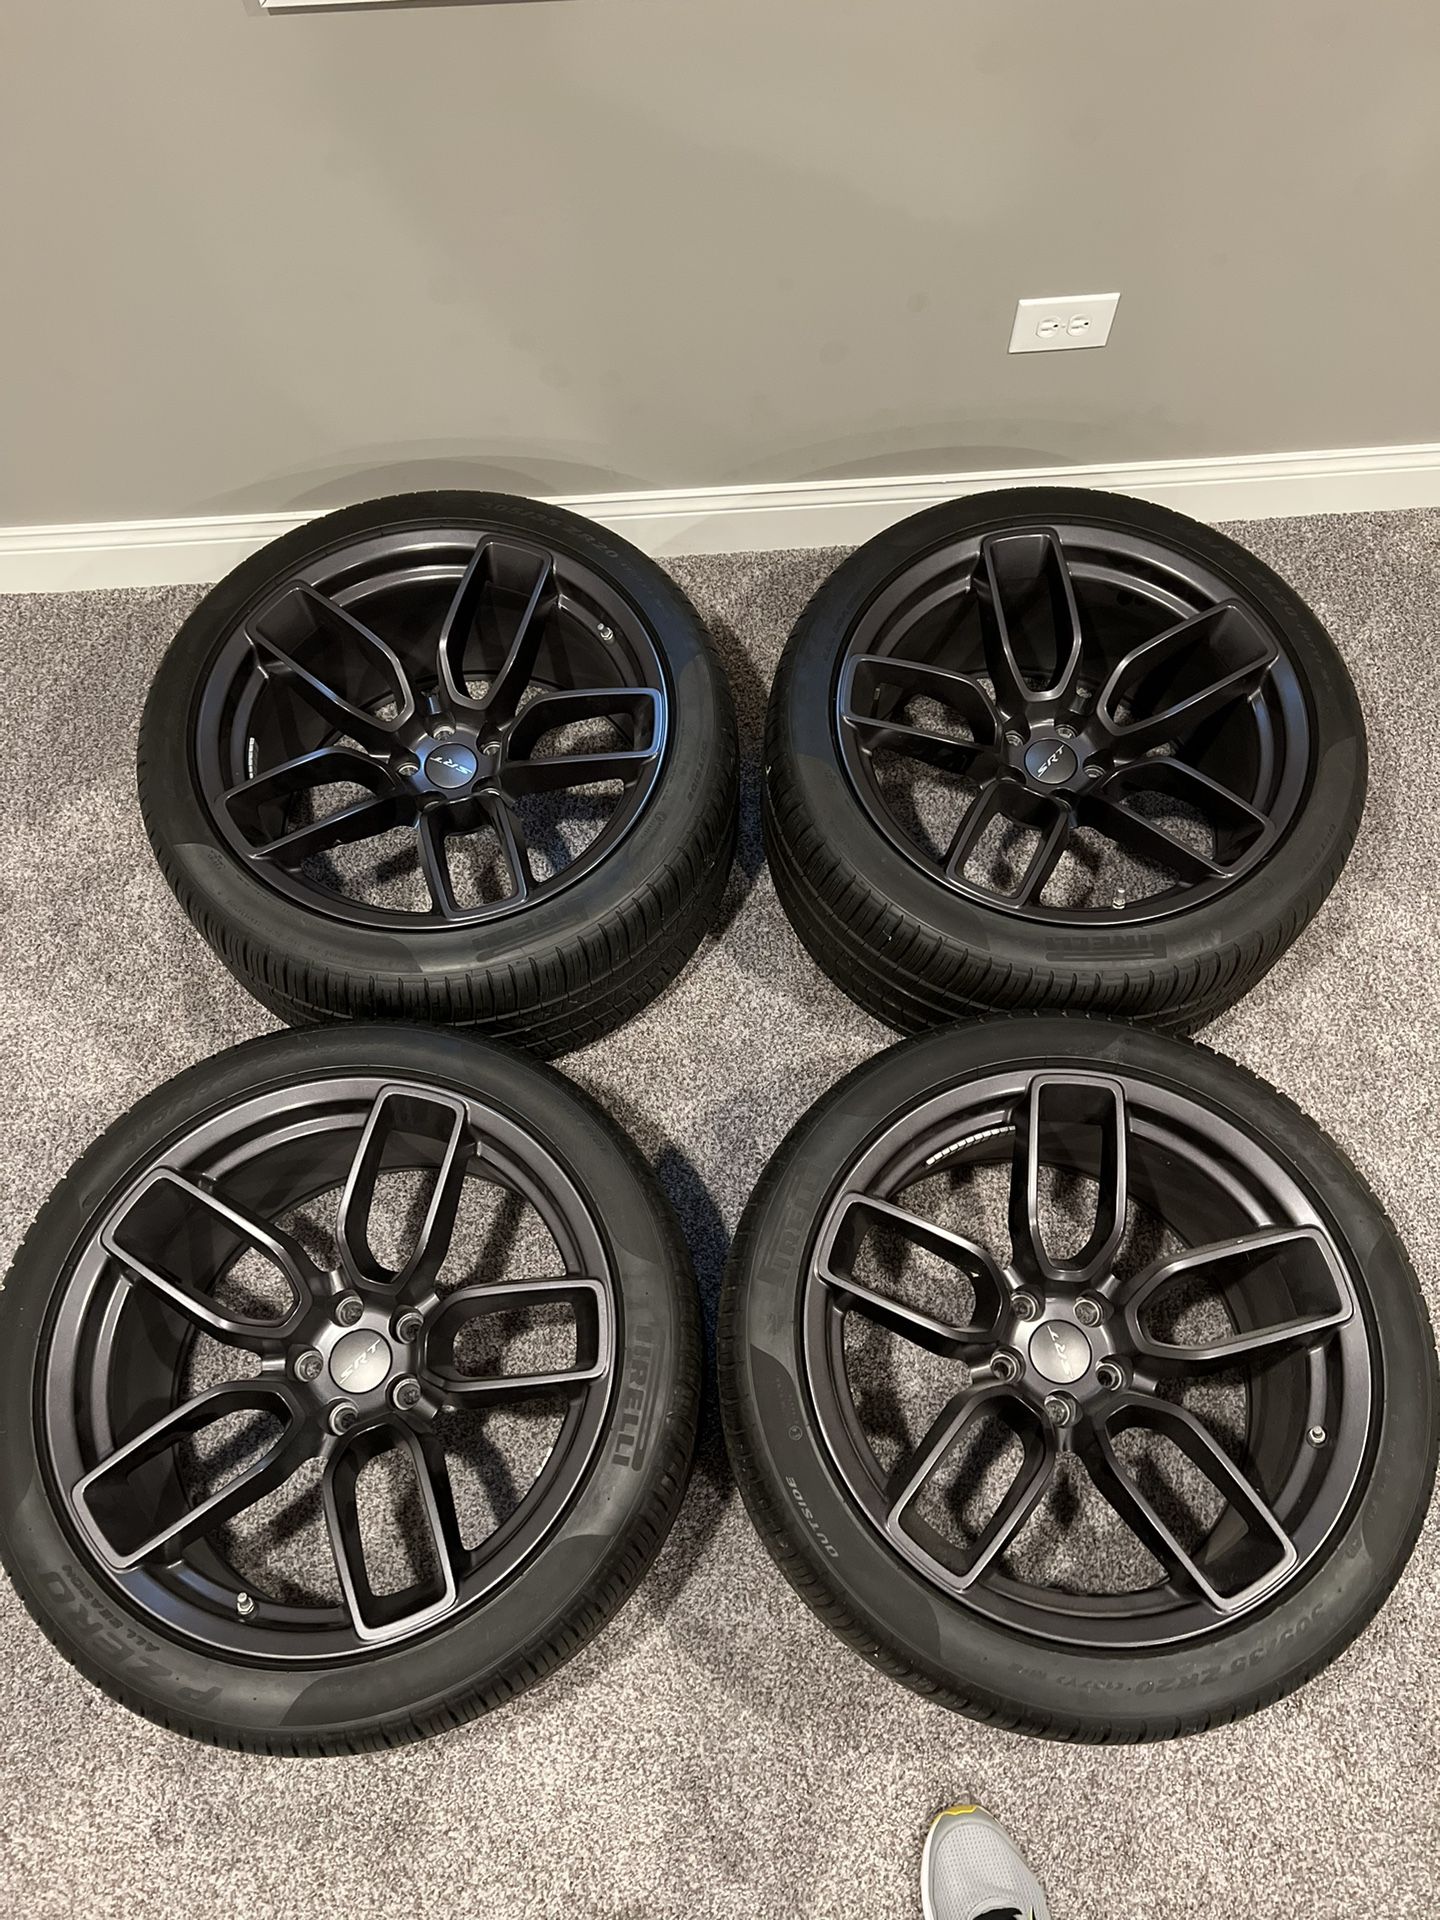 Set of 4 Devil’s Rim wheels & tires.